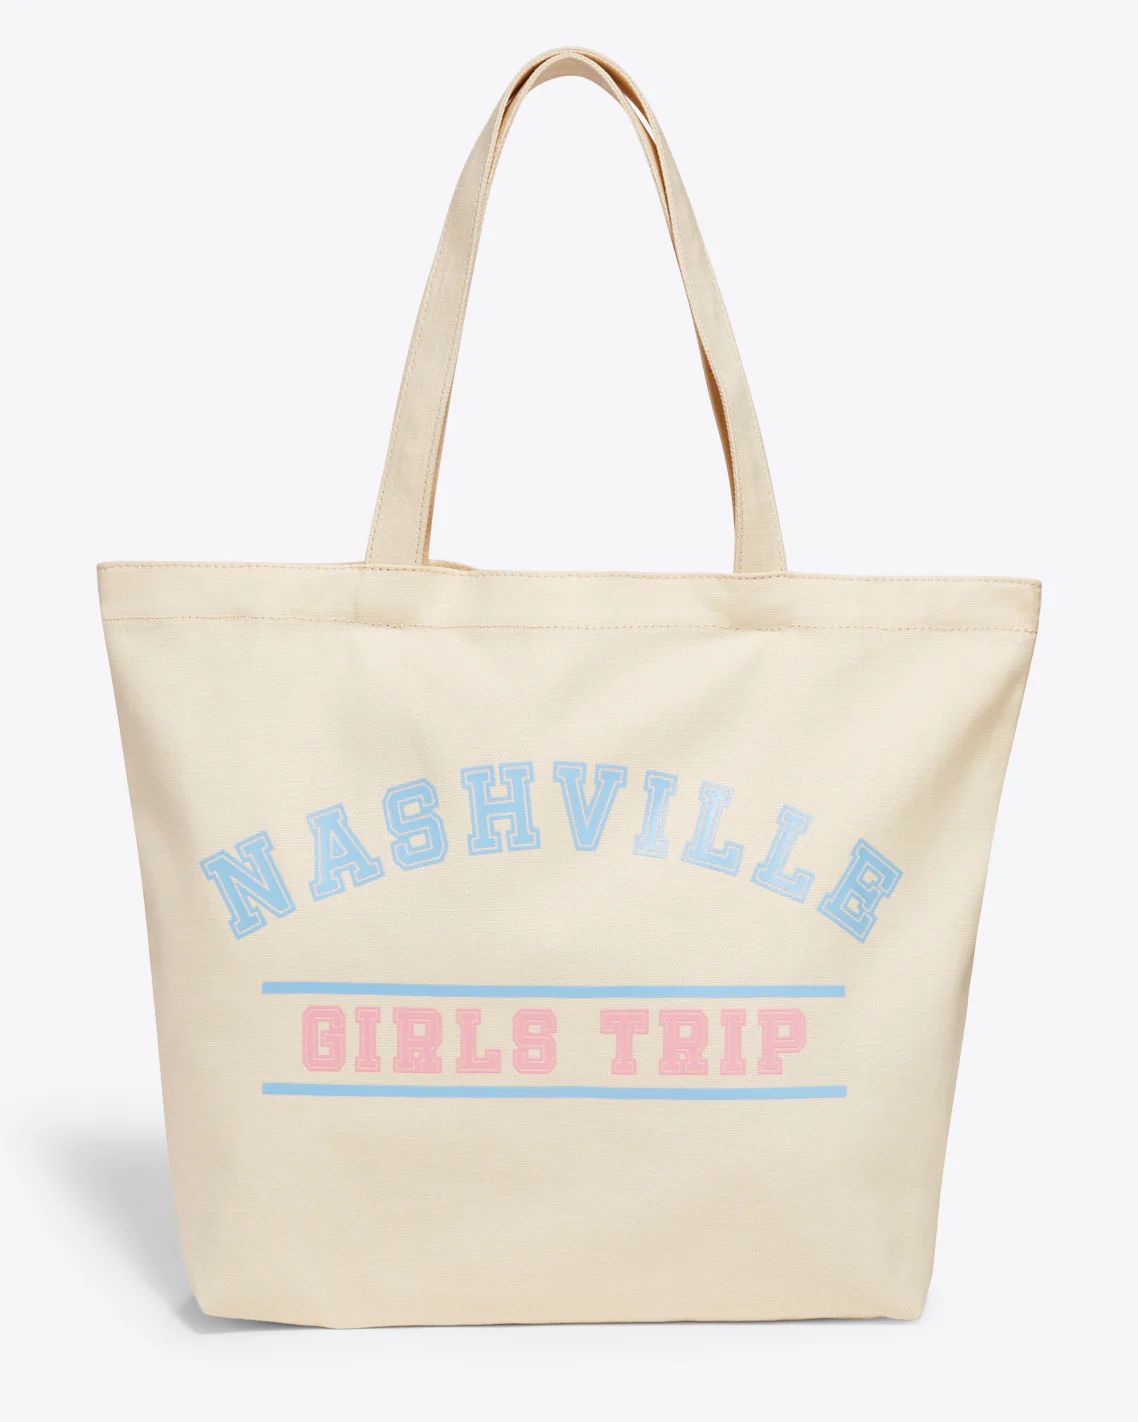 Nashville Girls Trip Canvas Tote | Draper James (US)